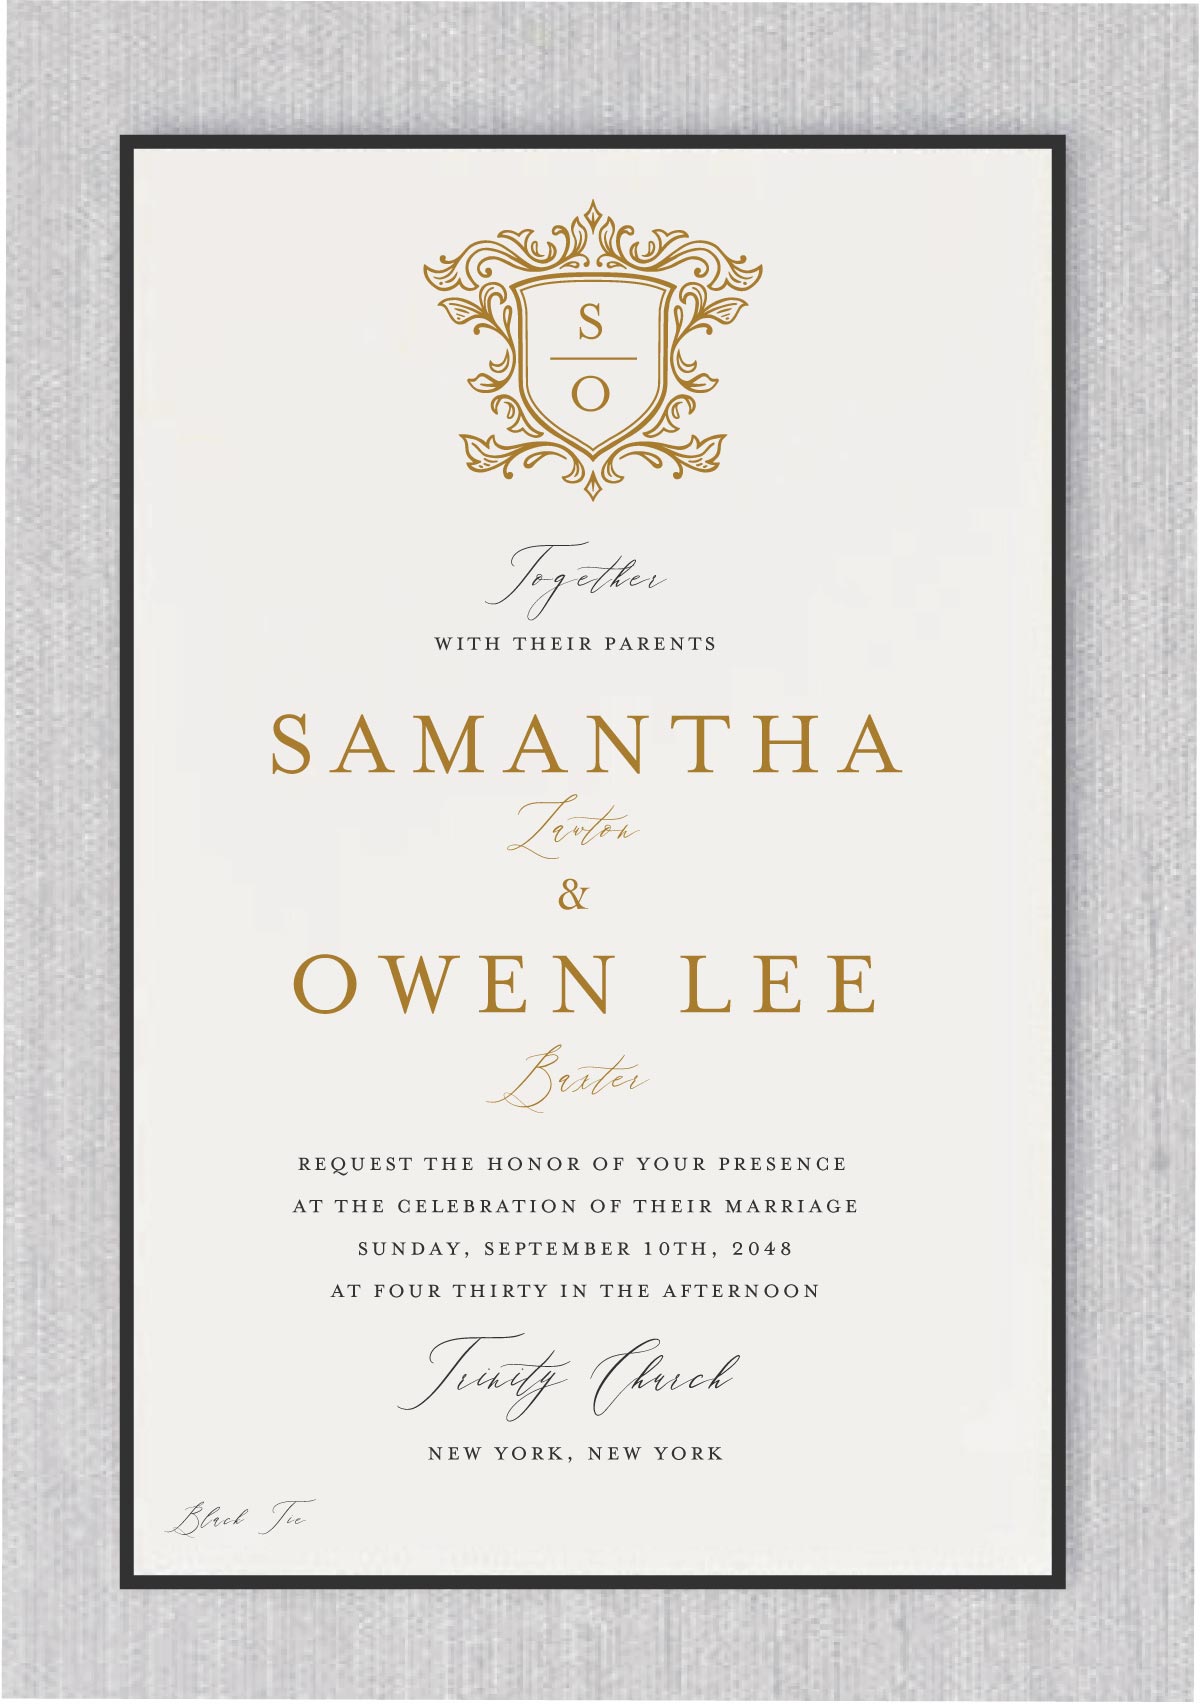 Your monogram is framed elegantly in this elegant Modern Monogram - Wedding Invitation on this gorgeous and trendy wedding invitation.